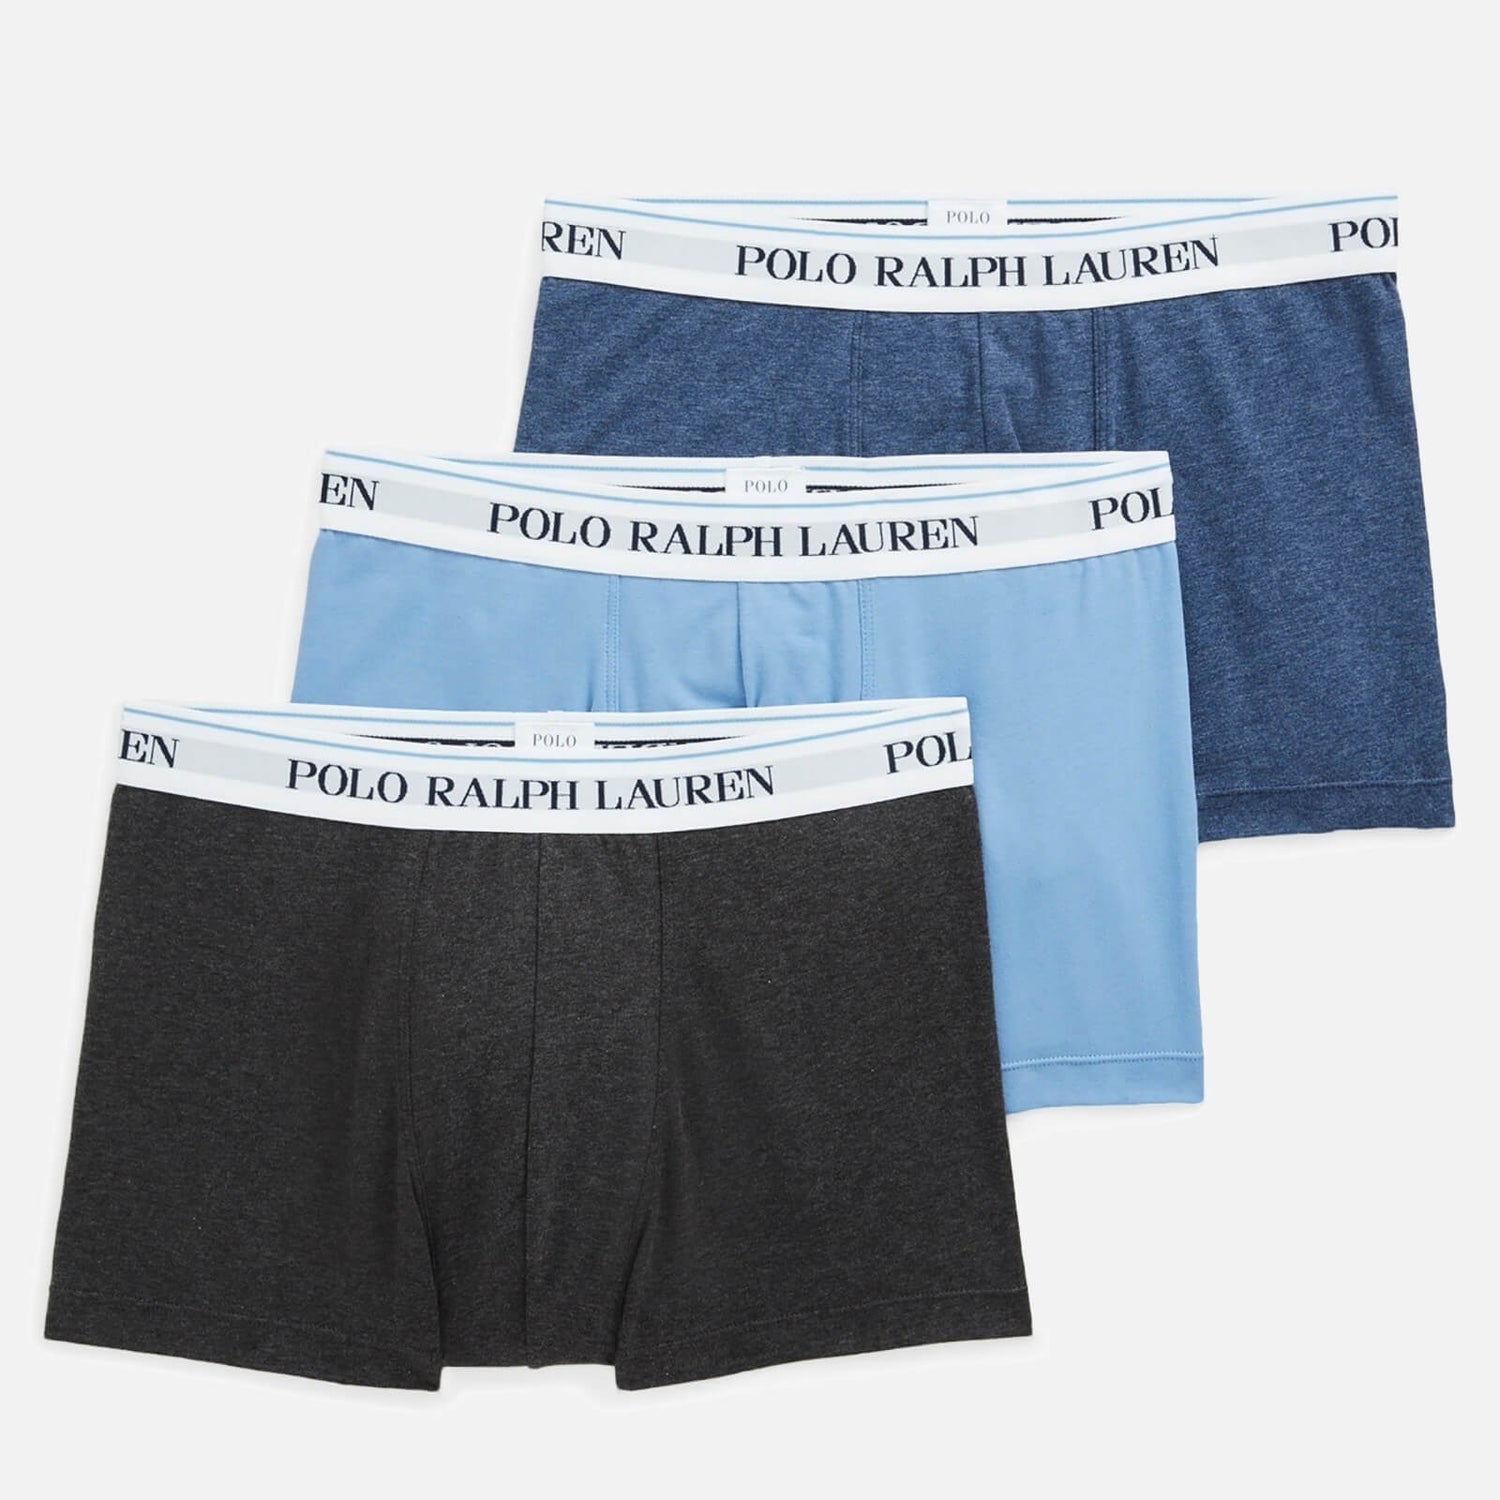 Polo Ralph Lauren Men's 3-Pack Classic Trunk Boxer Shorts - Navy/Sky/Blue